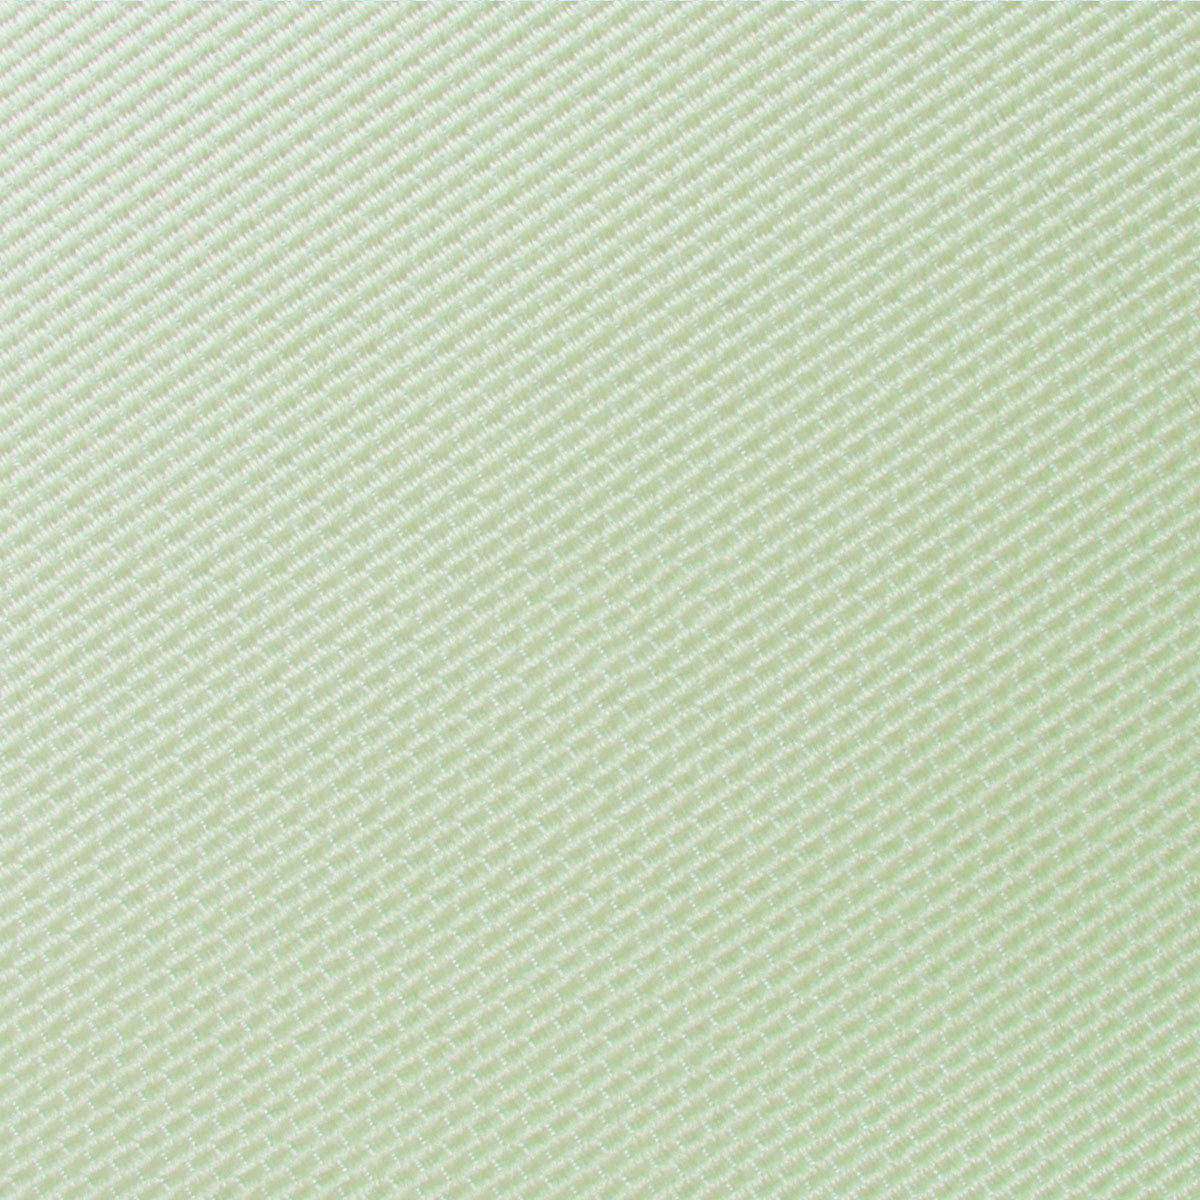 Light Sage Green Weave Skinny Tie Fabric